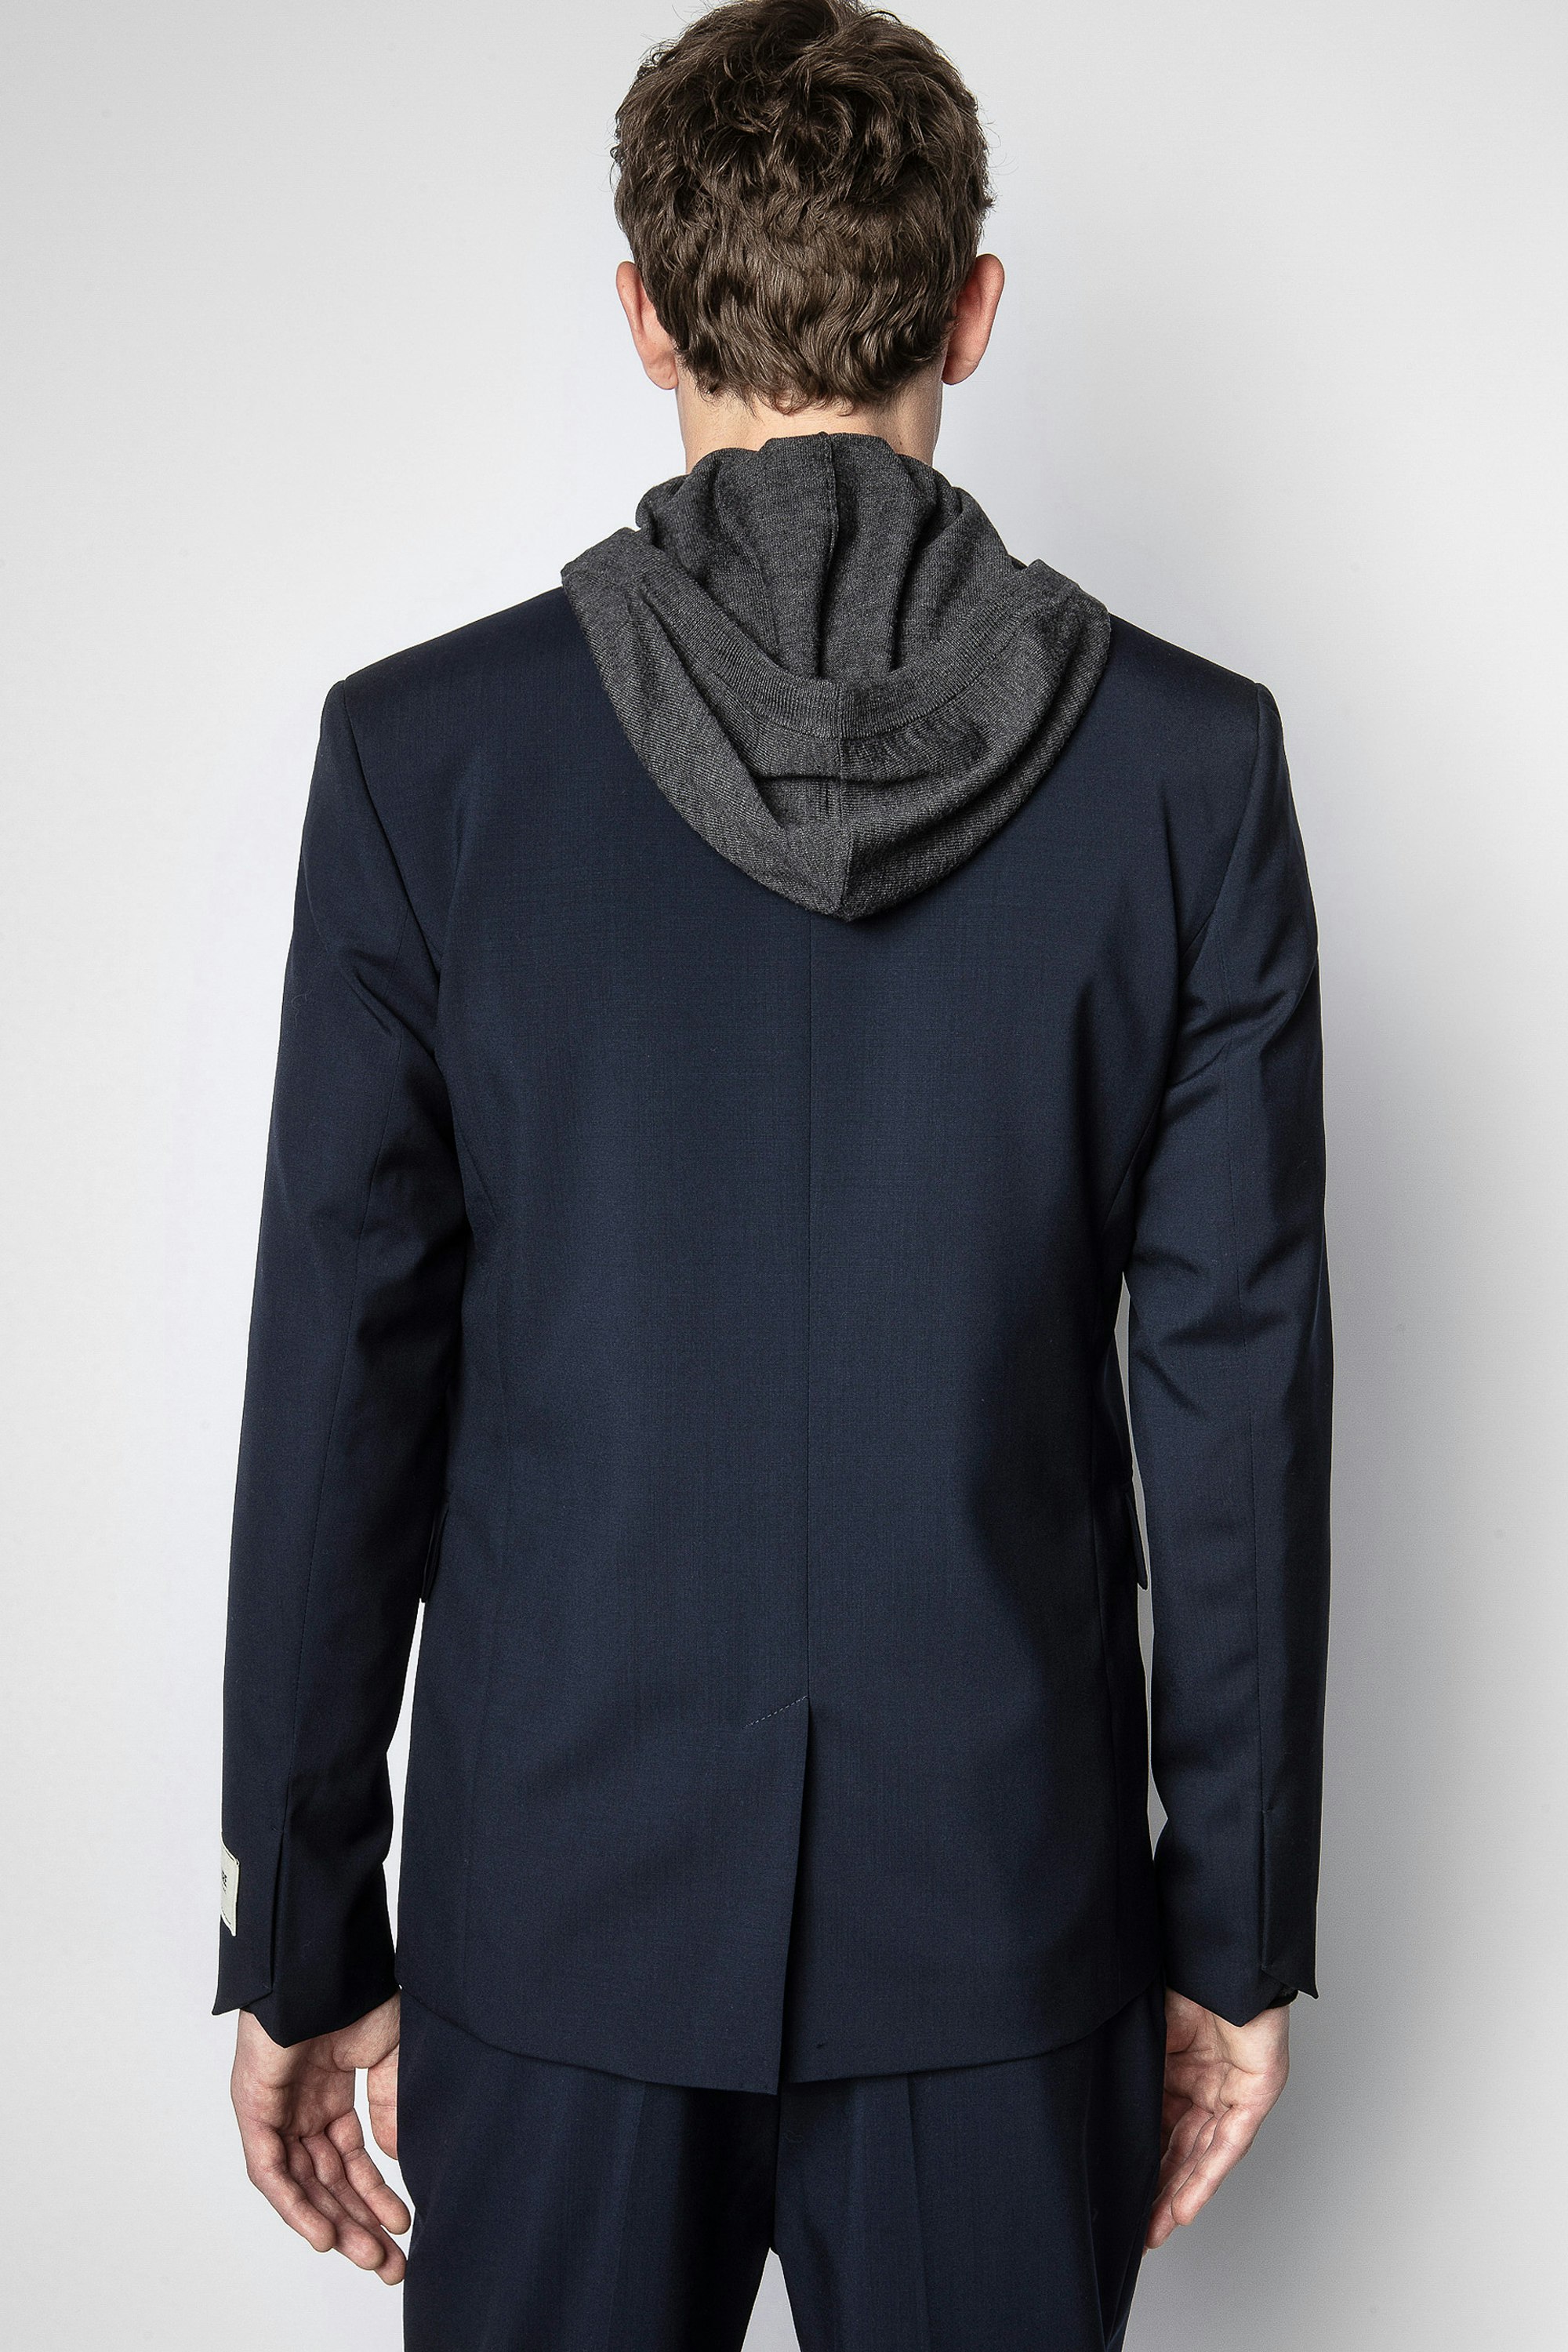 Version Wool jacket